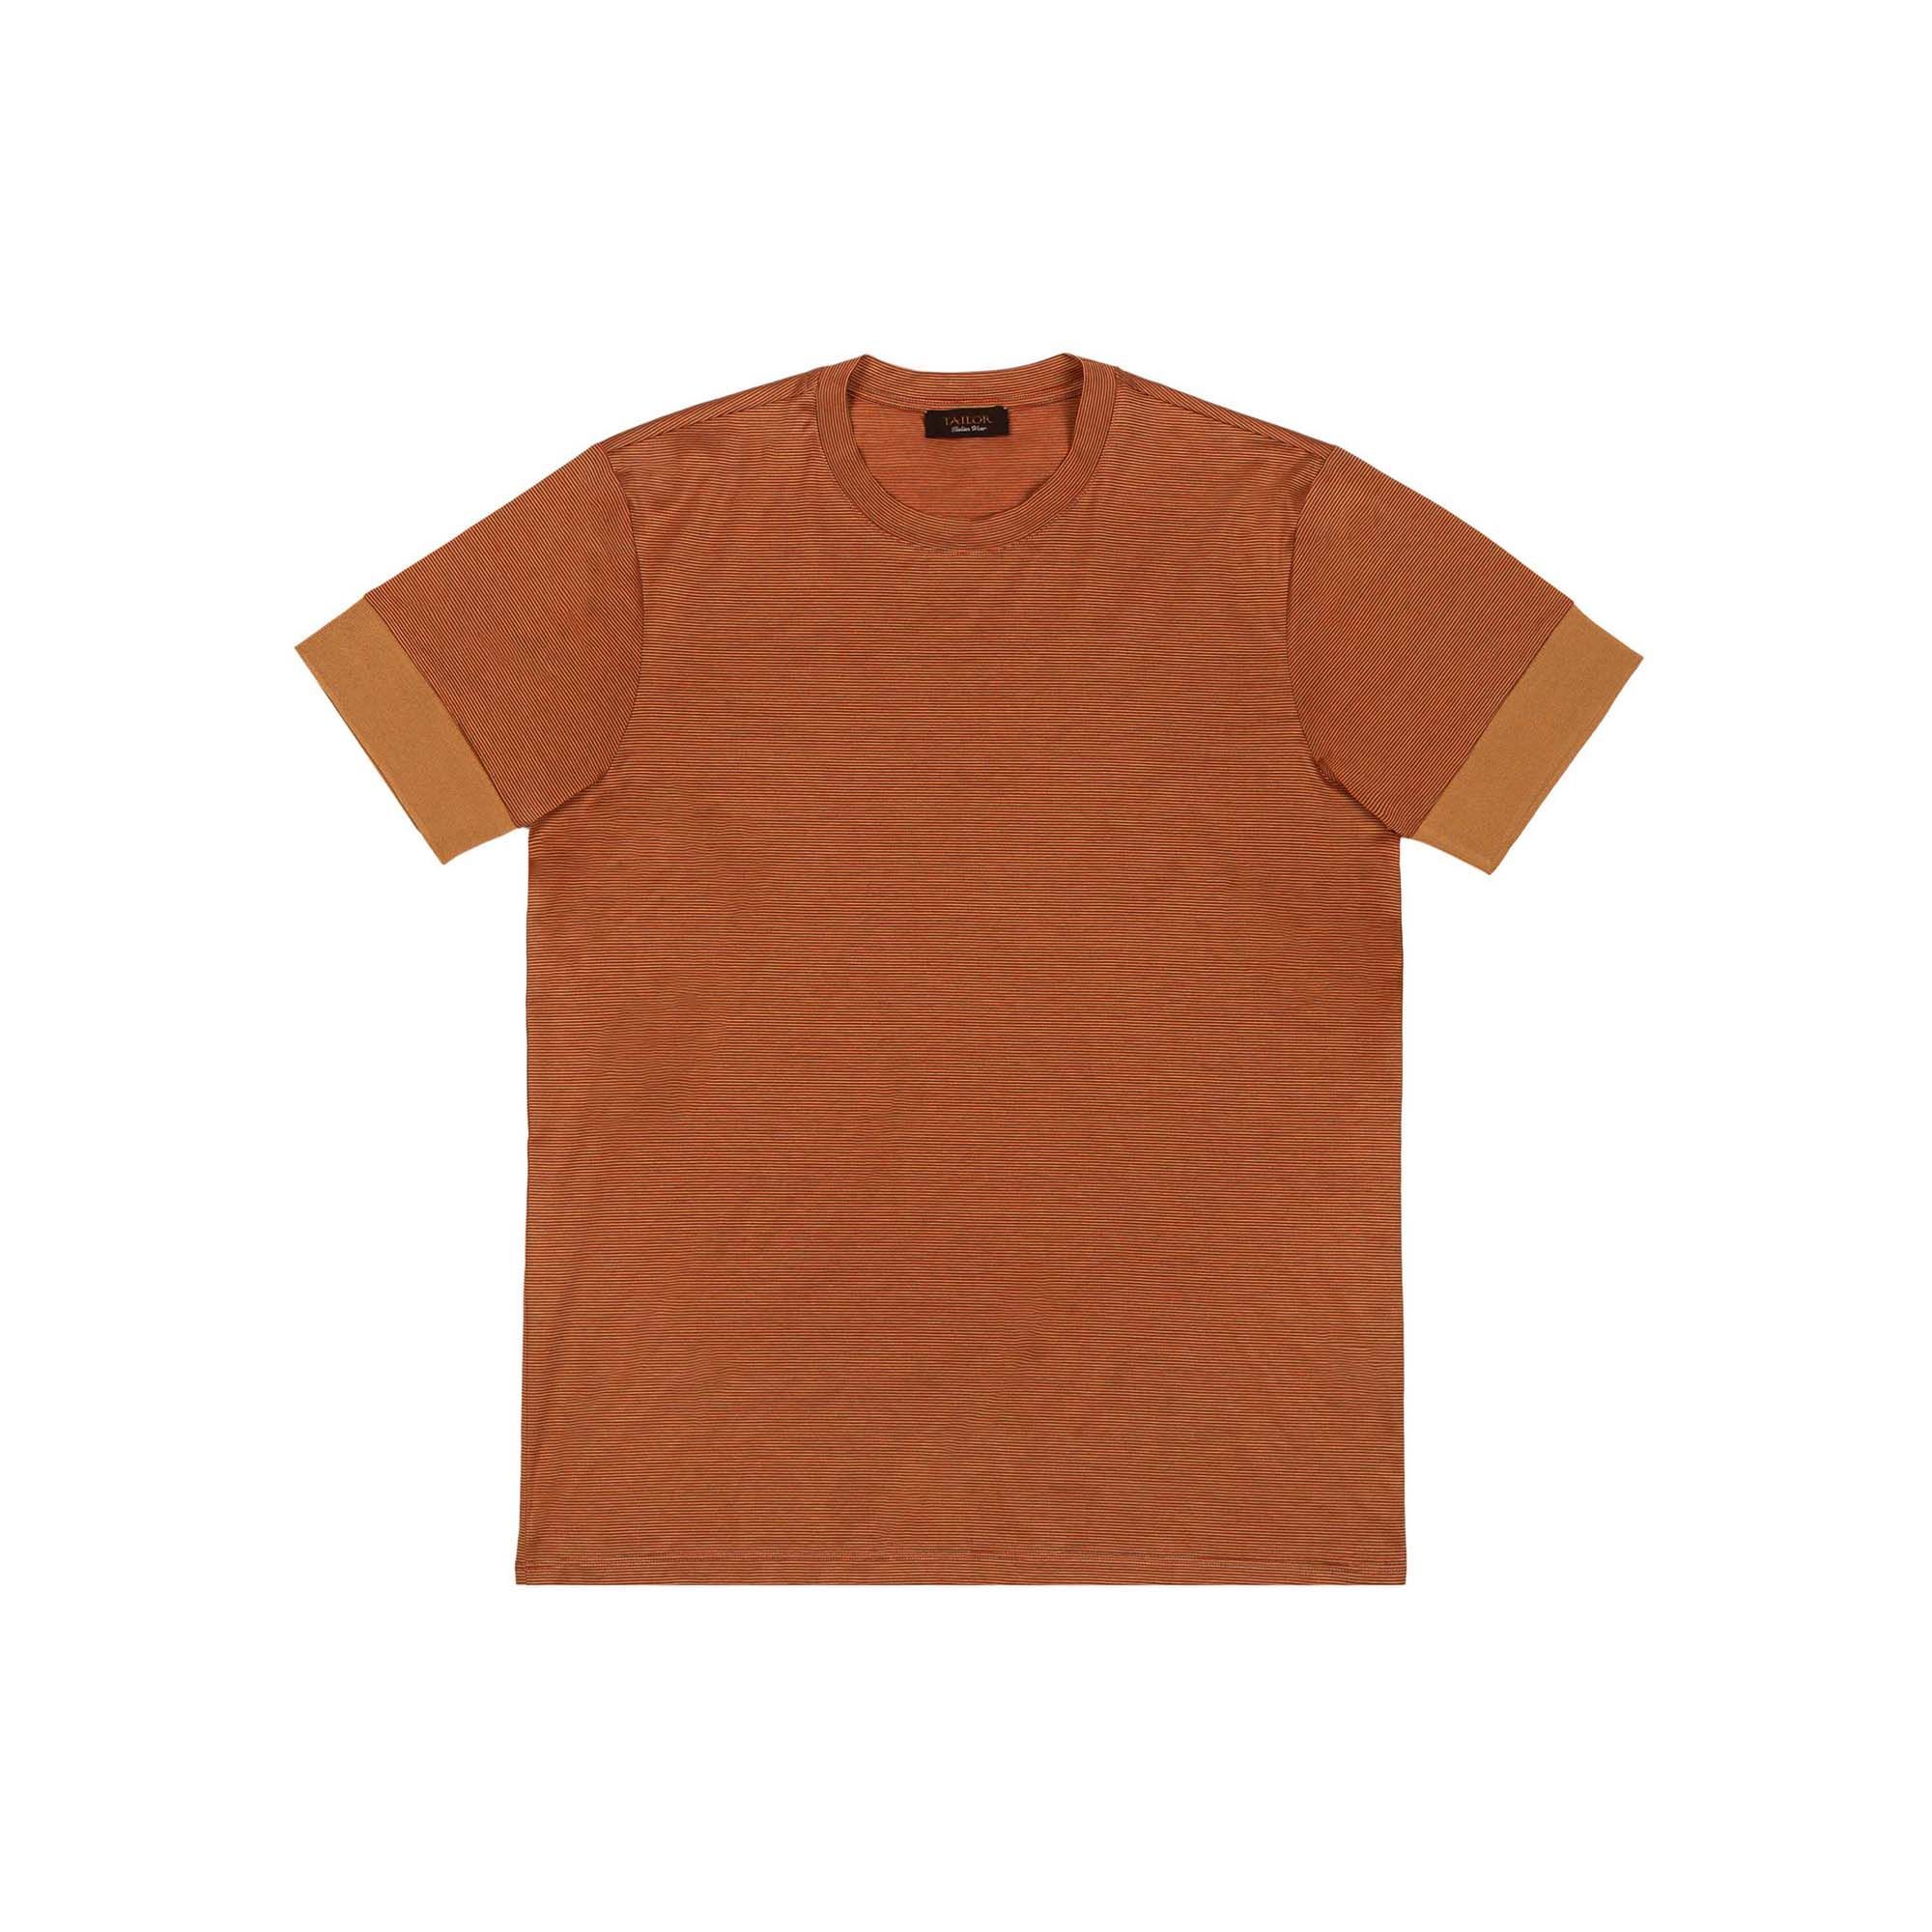 Men's striped t-shirt orange